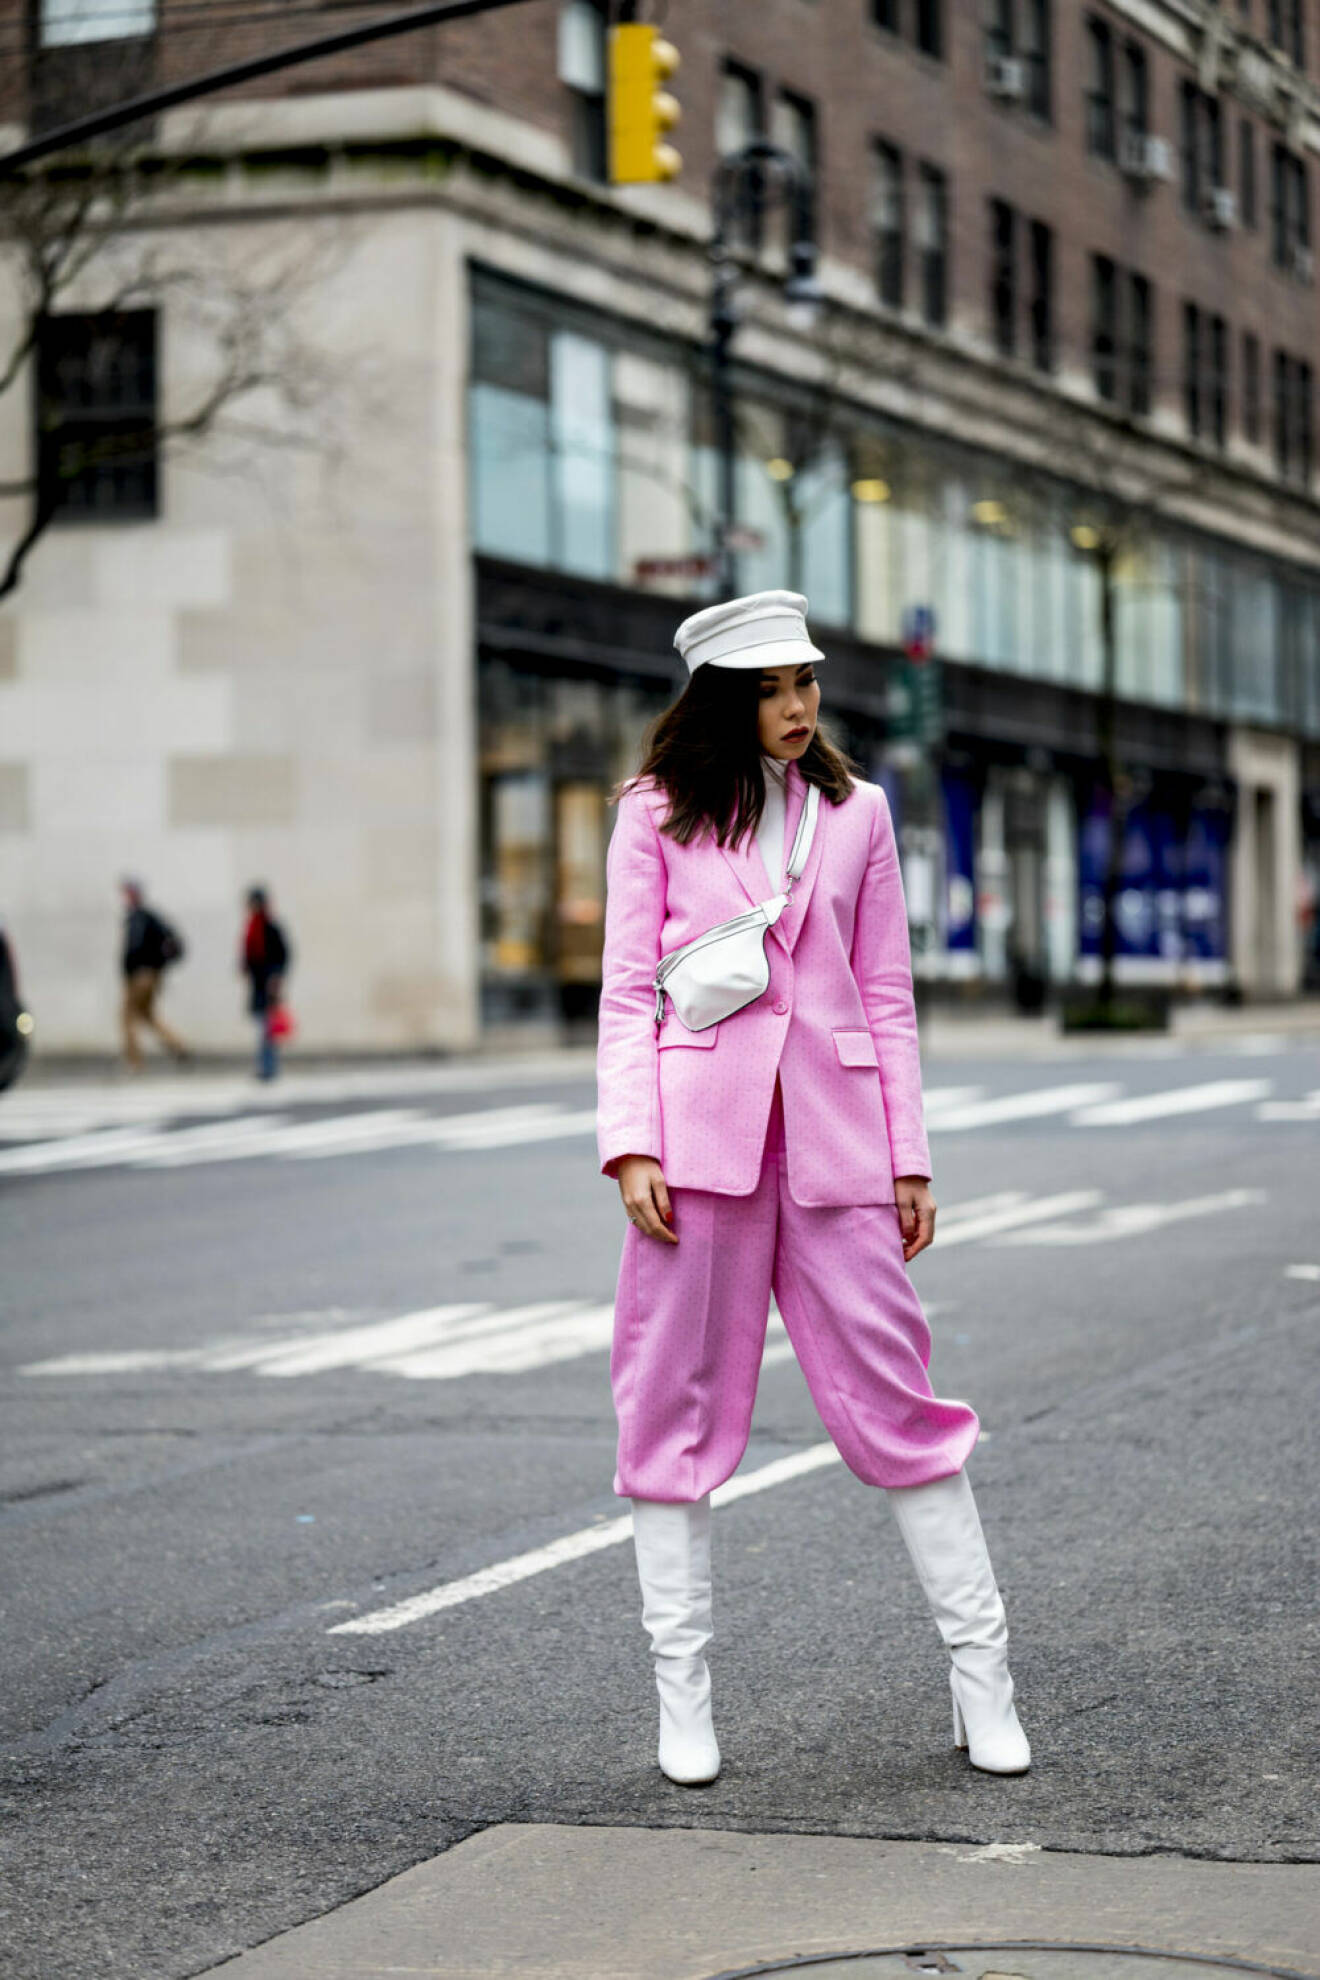 Streetstyle NYFW, kvinna i rosa kostym och vita detaljer.